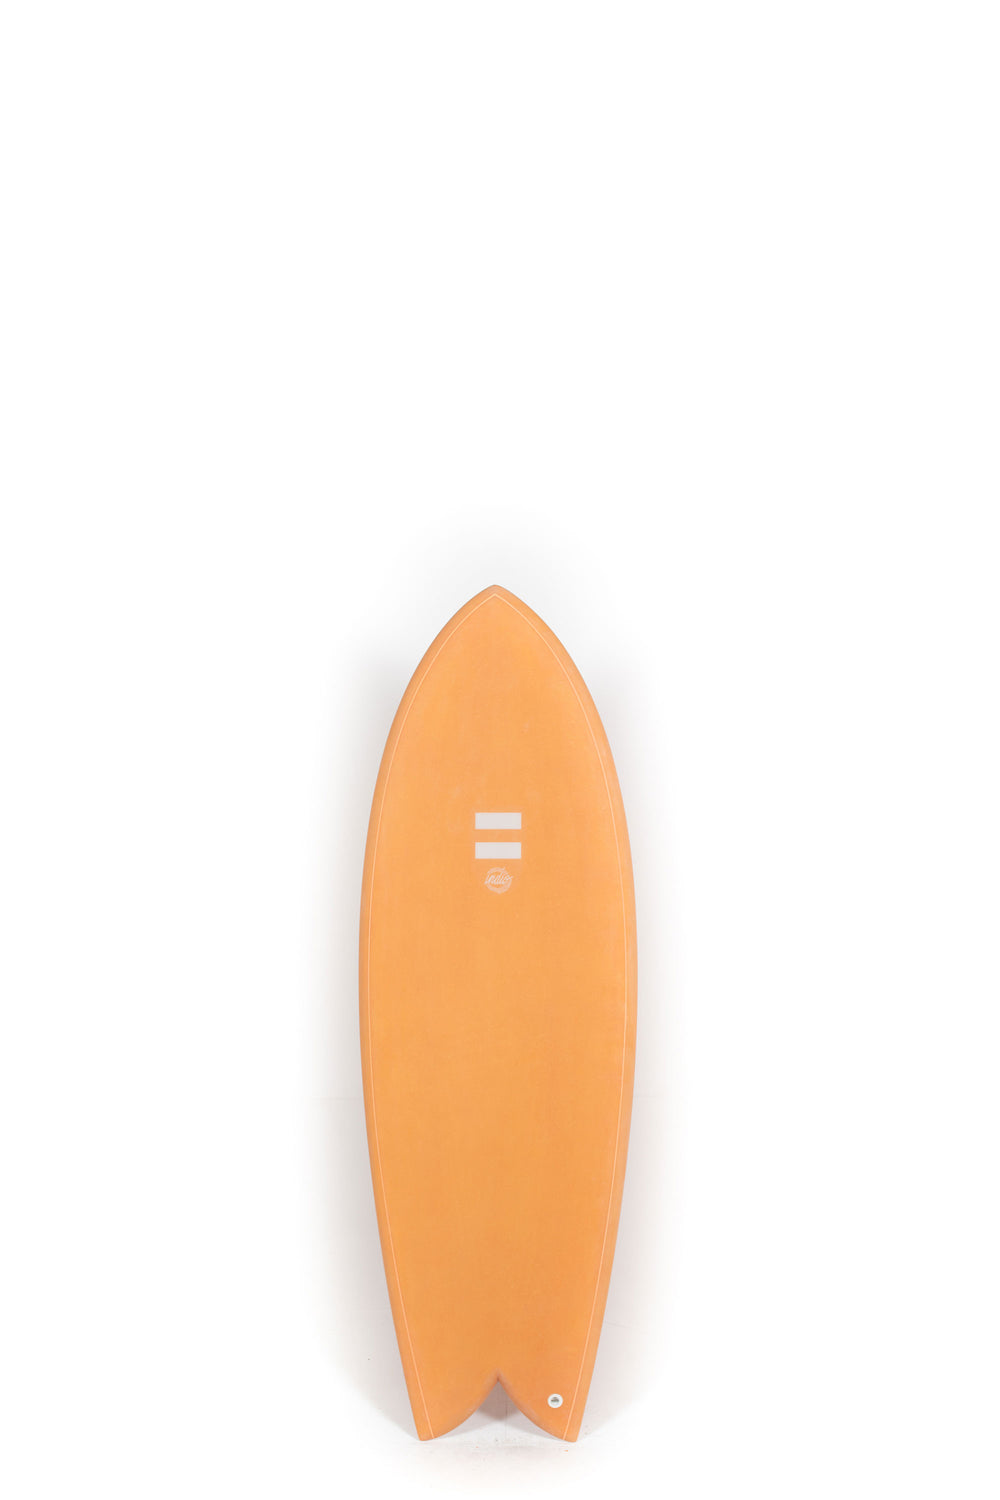 Pukas Surf Shop -  Indio Surfboards - DAB TERRACOTA FCS II - 5’5” x 20 7/8 x 2 7/16 x 33.50L.